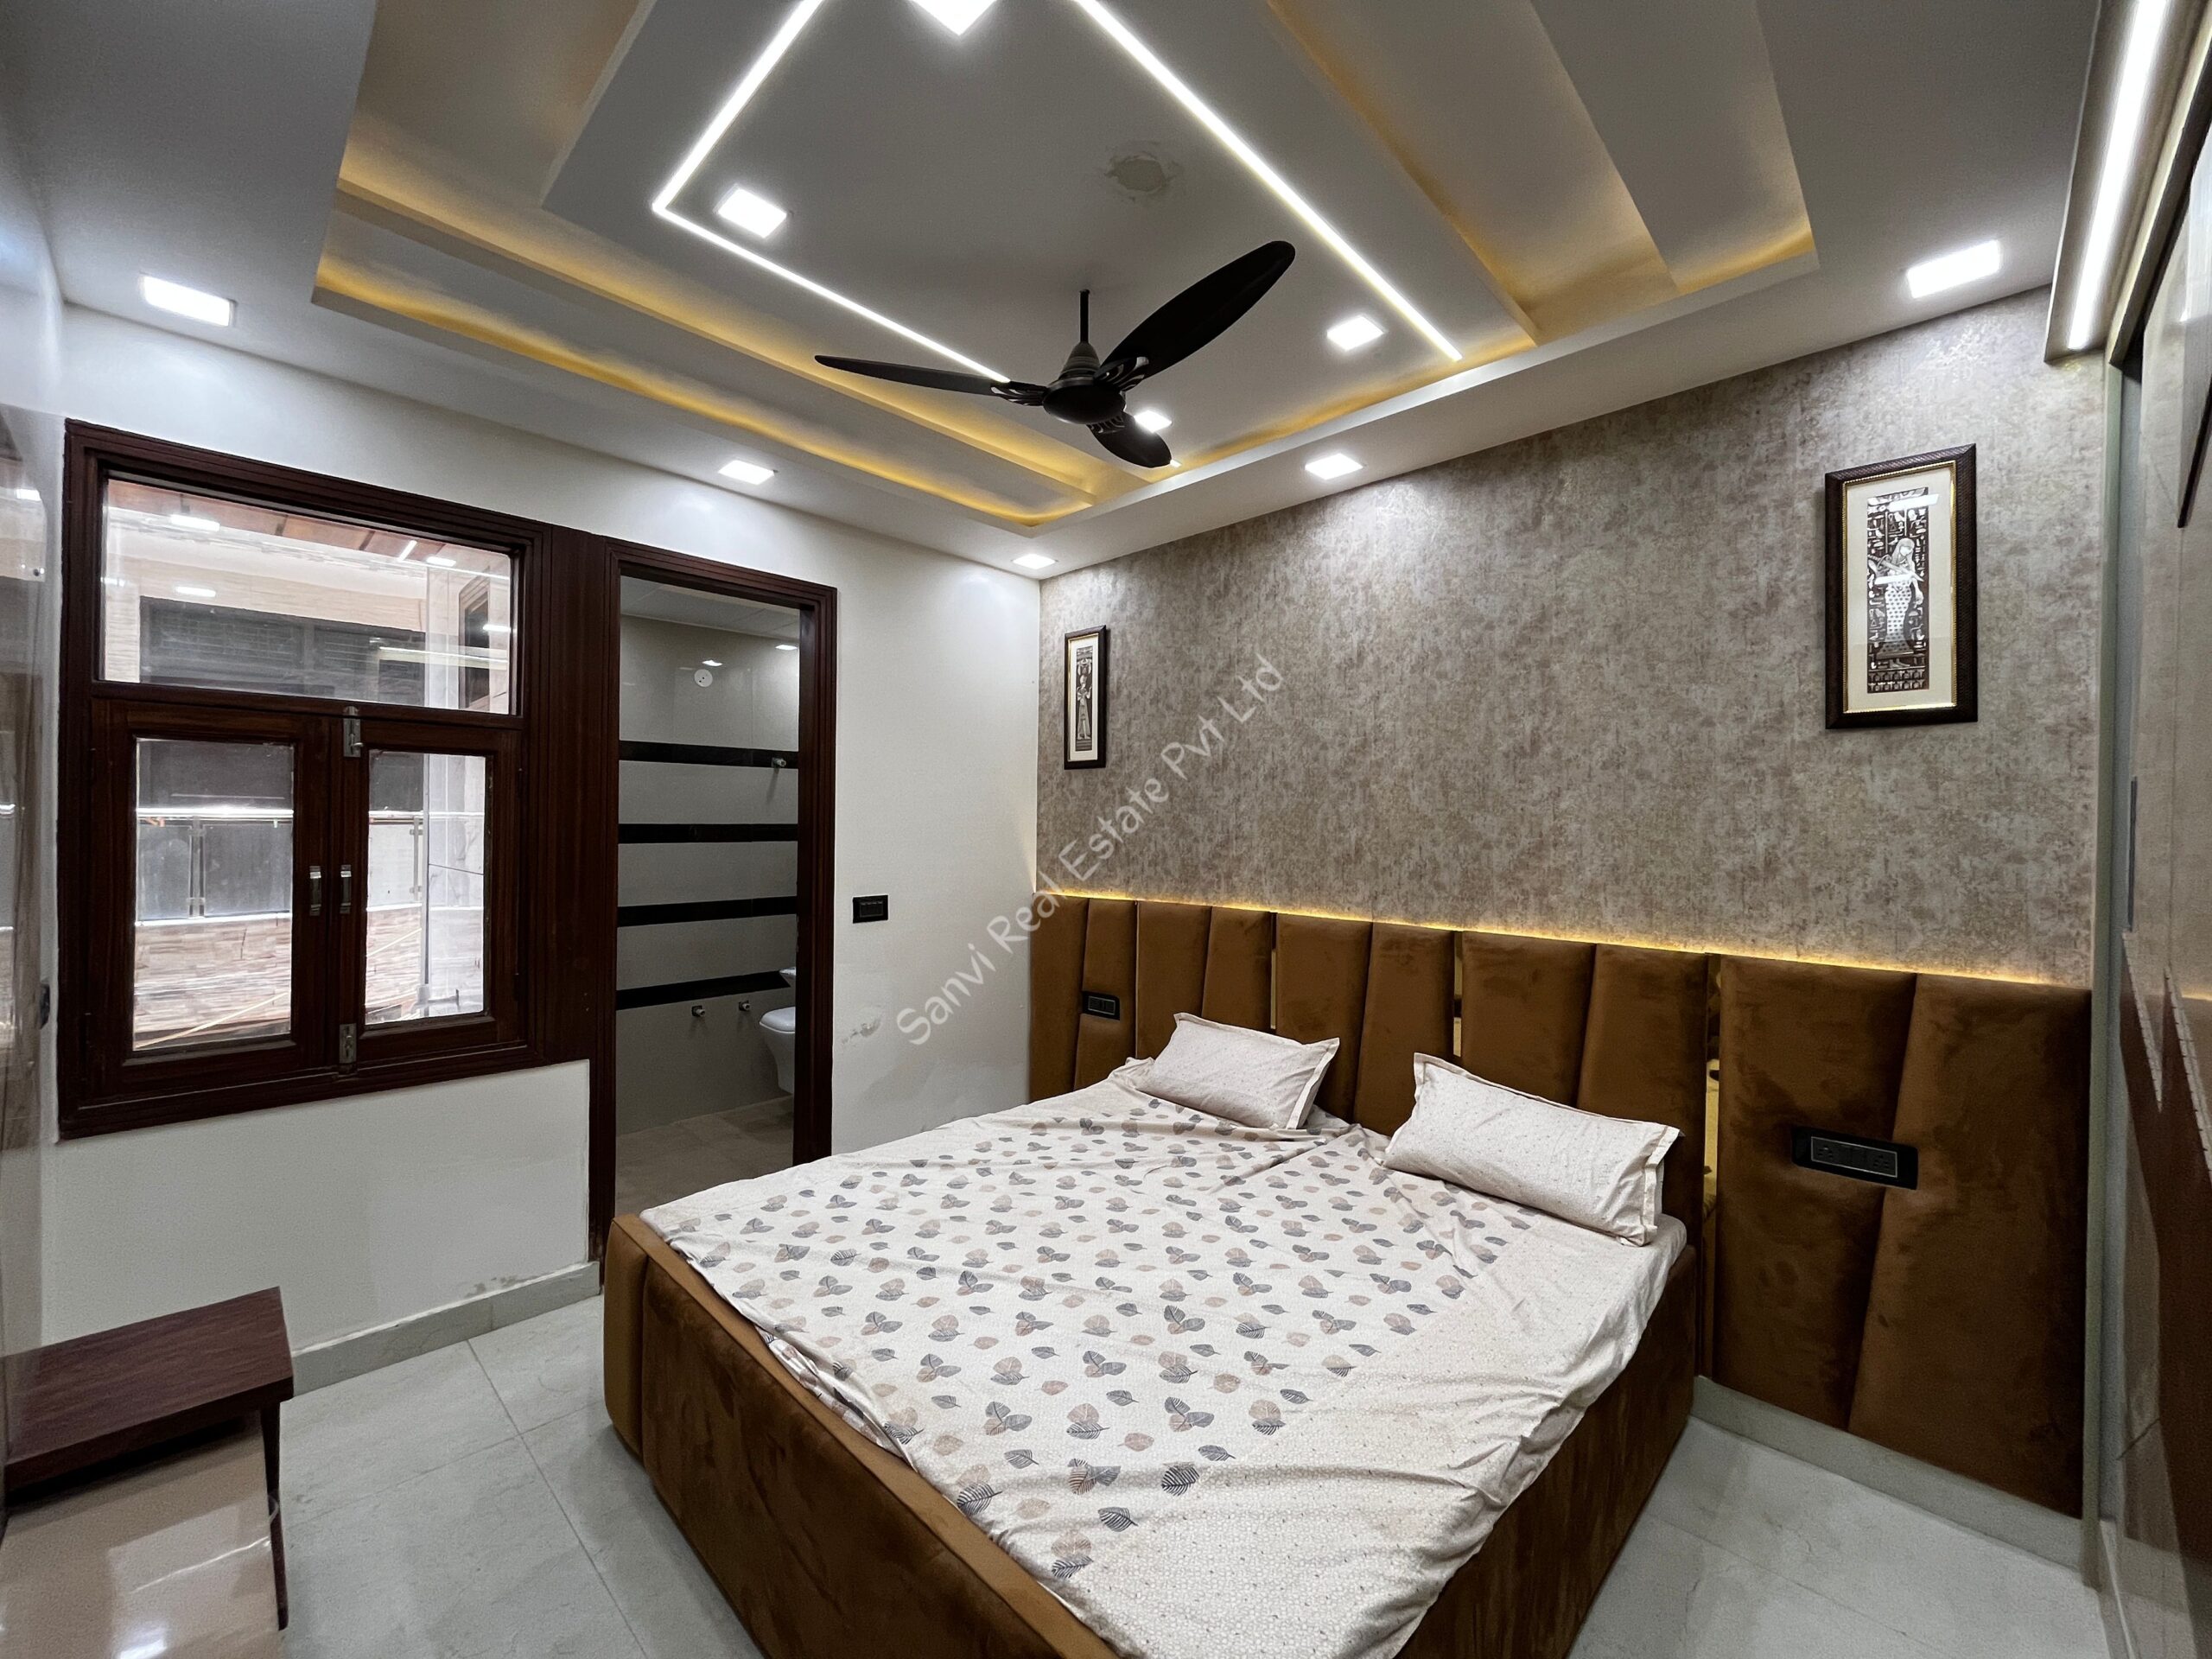 3 BHK Builder Flat in Uttam Nagar | Sanvi Real Estate | Property in Delhi